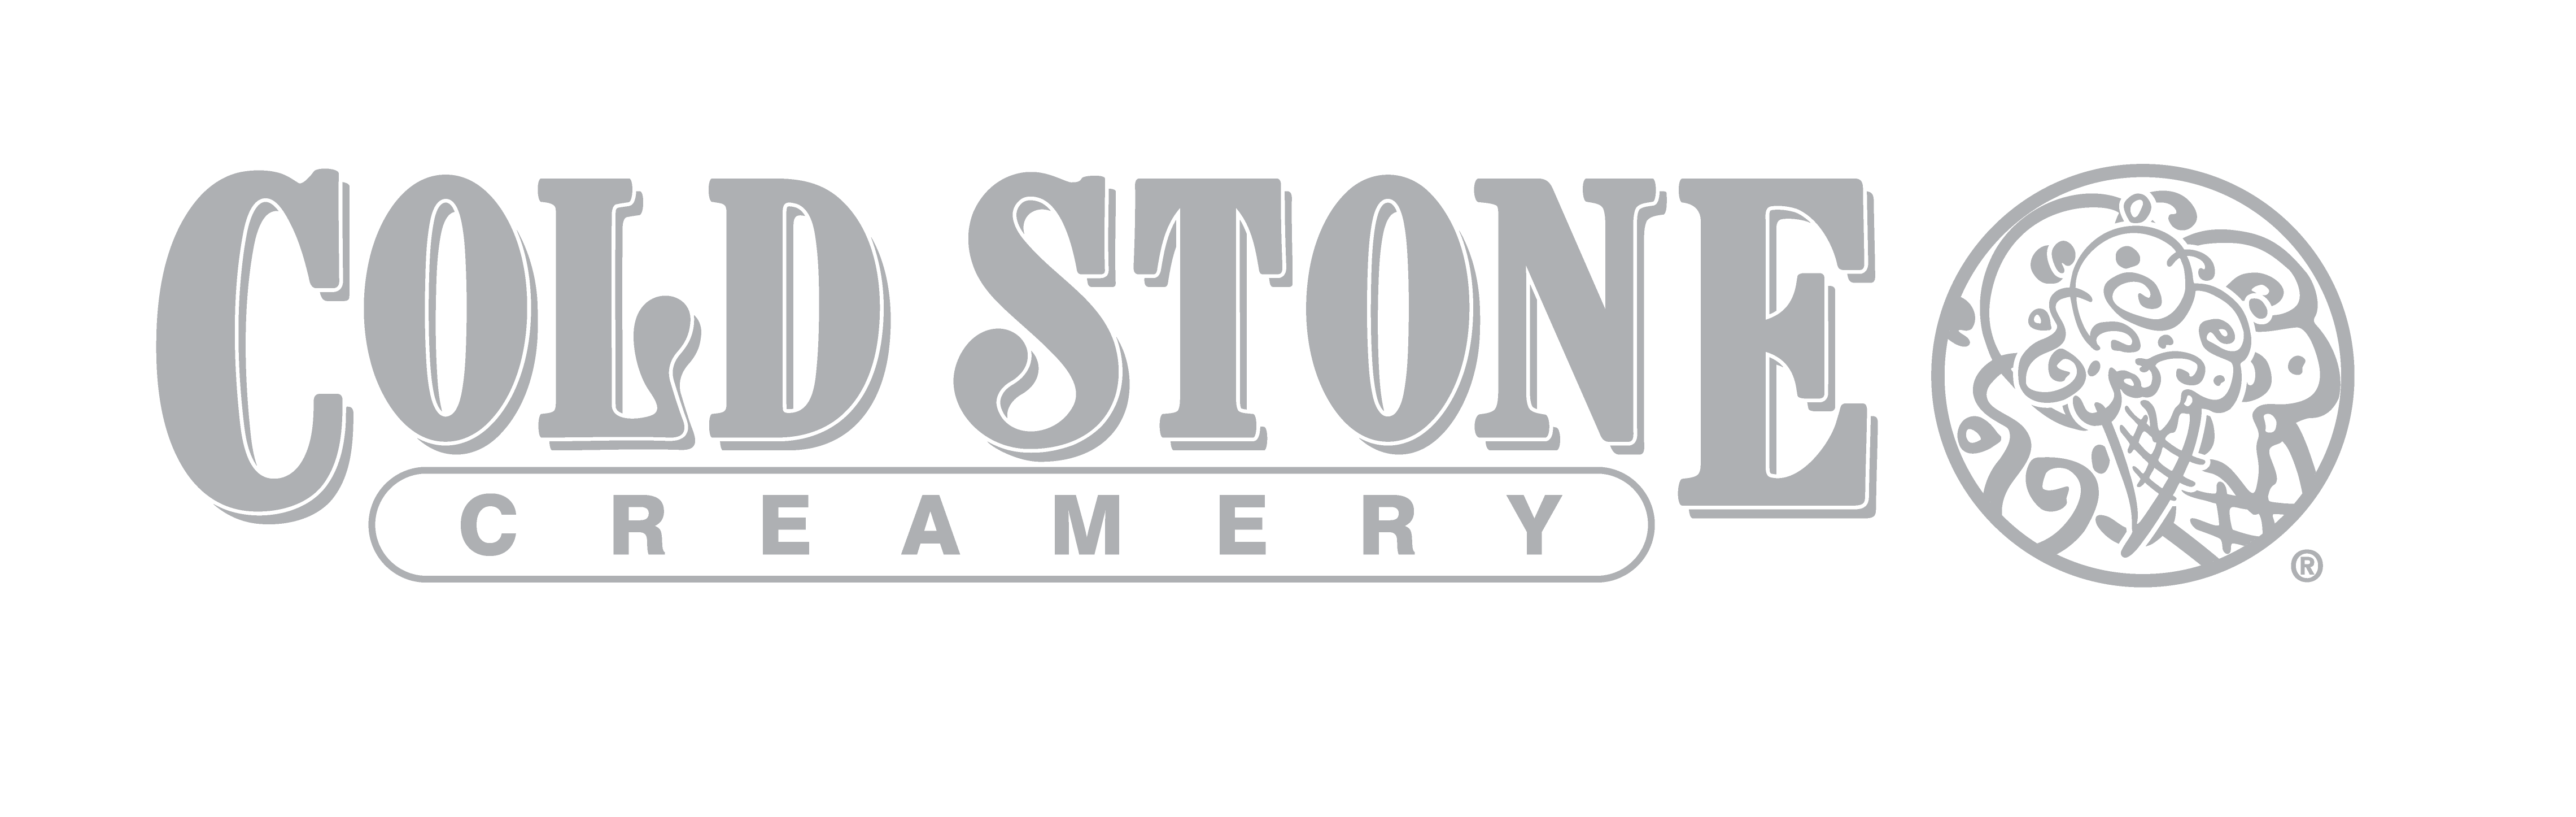 Cold Stone Creamery logo in gray.